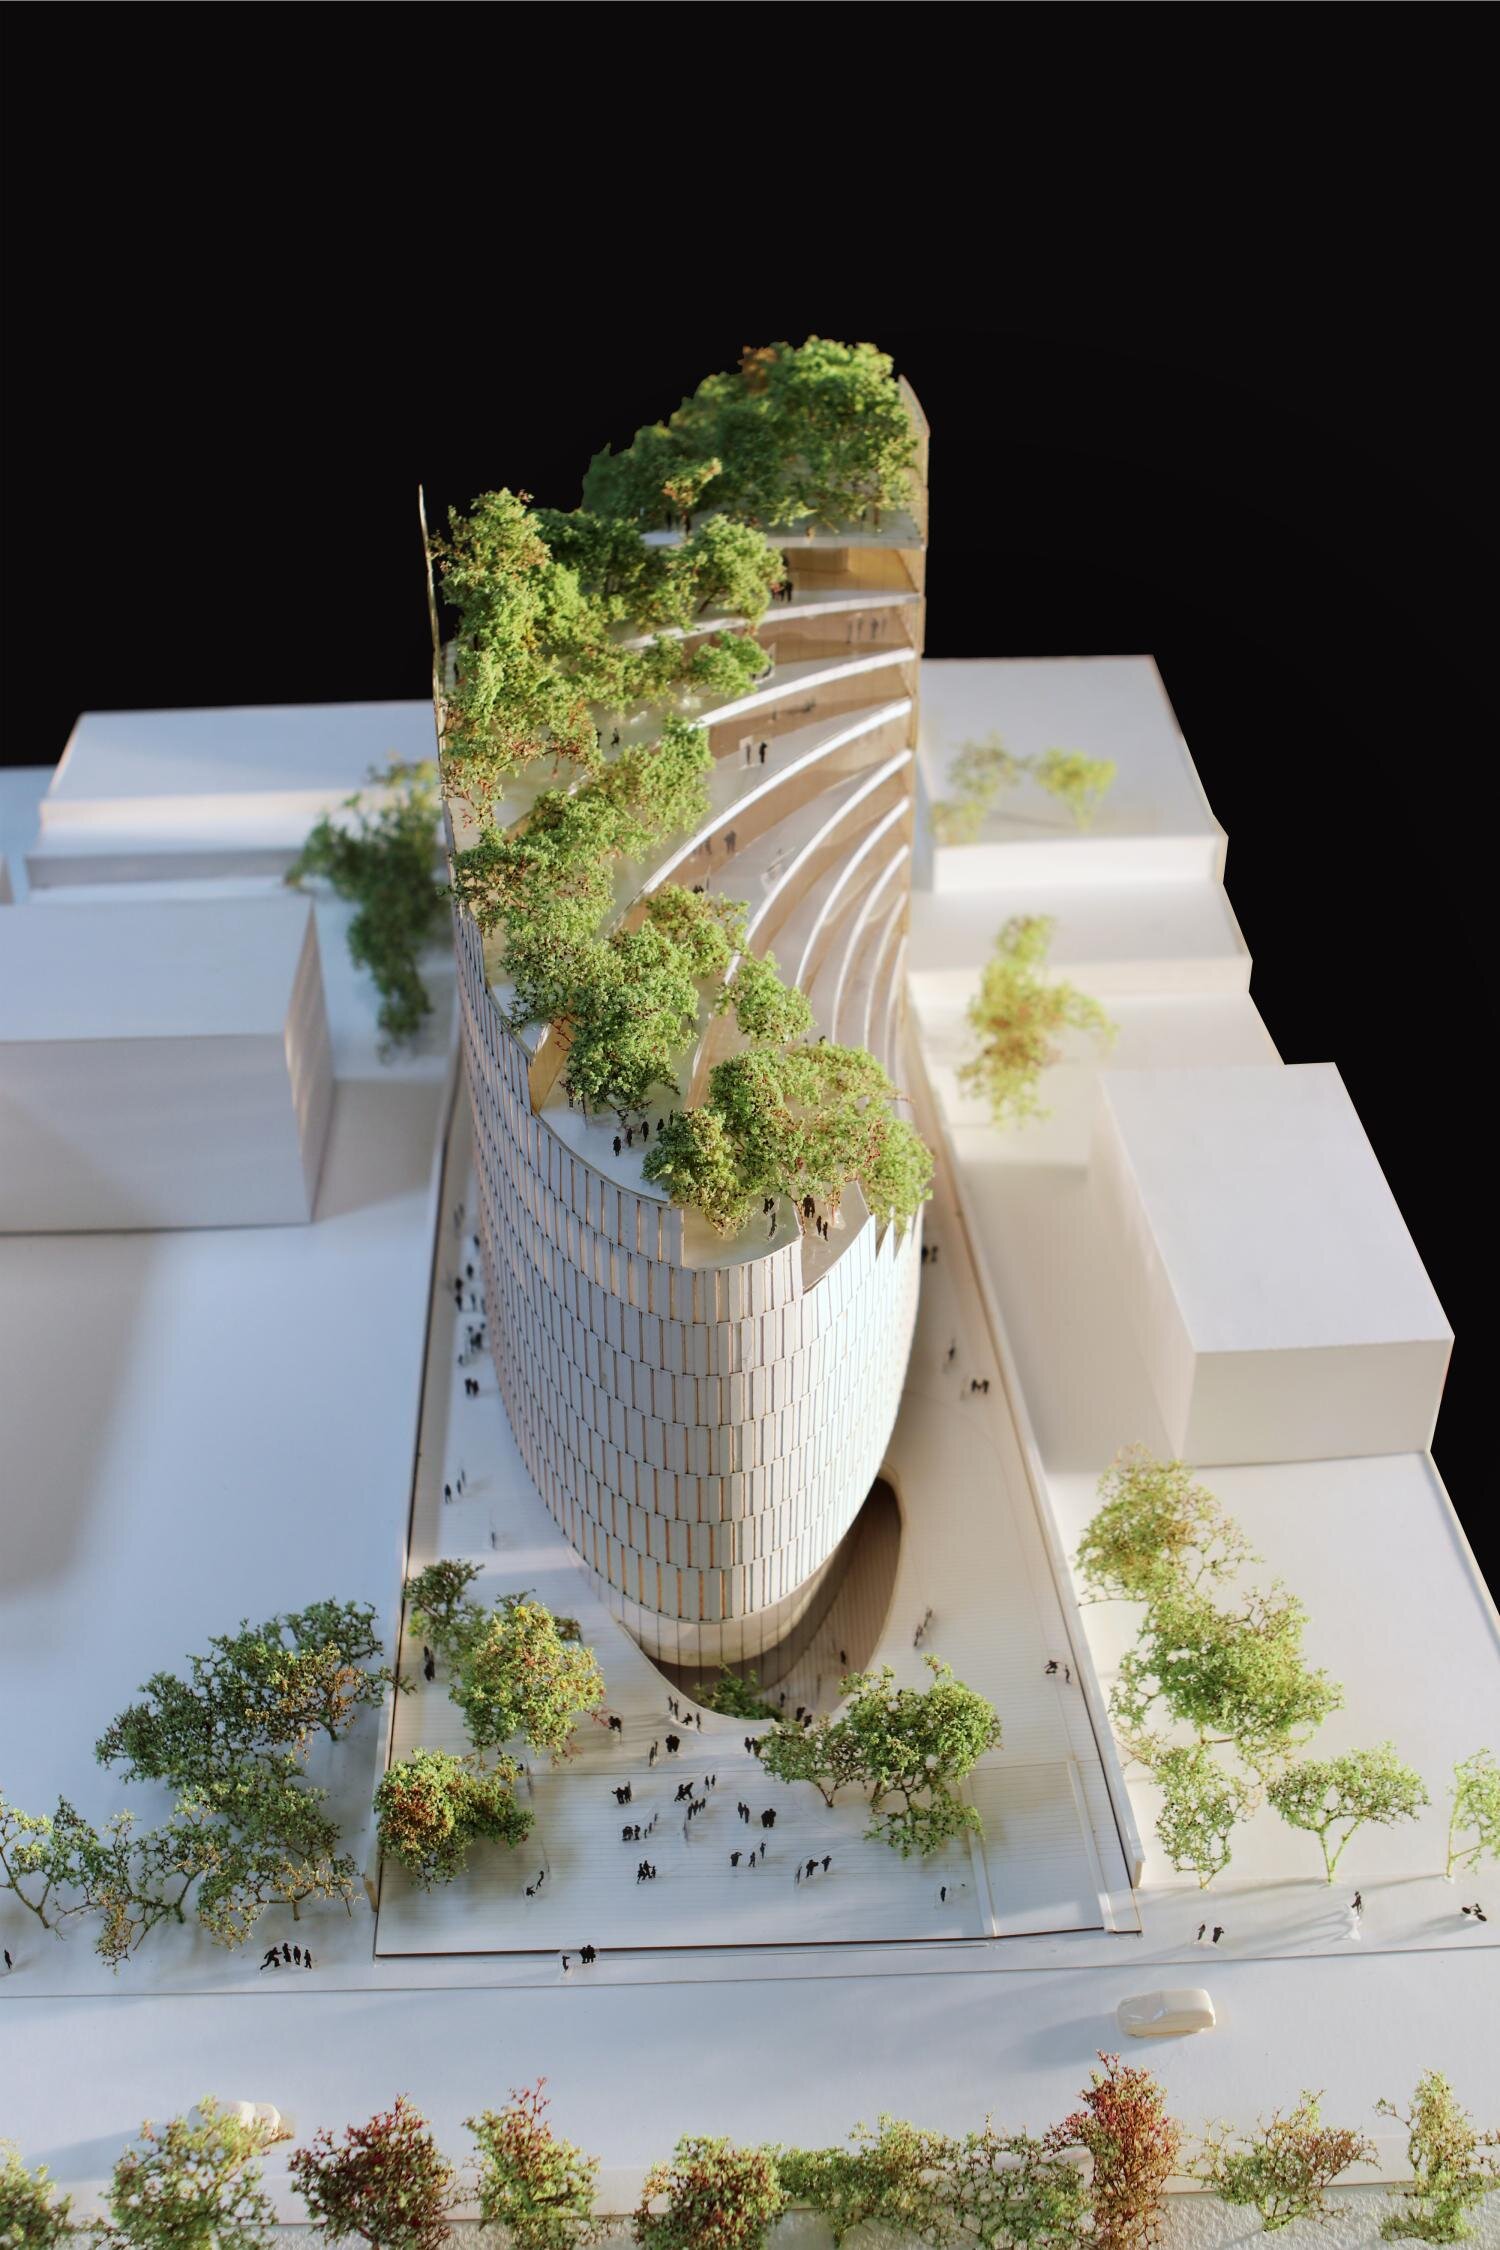 Mario-Cucinella-Architects-Visual-Atelier-8-MET-7.jpg